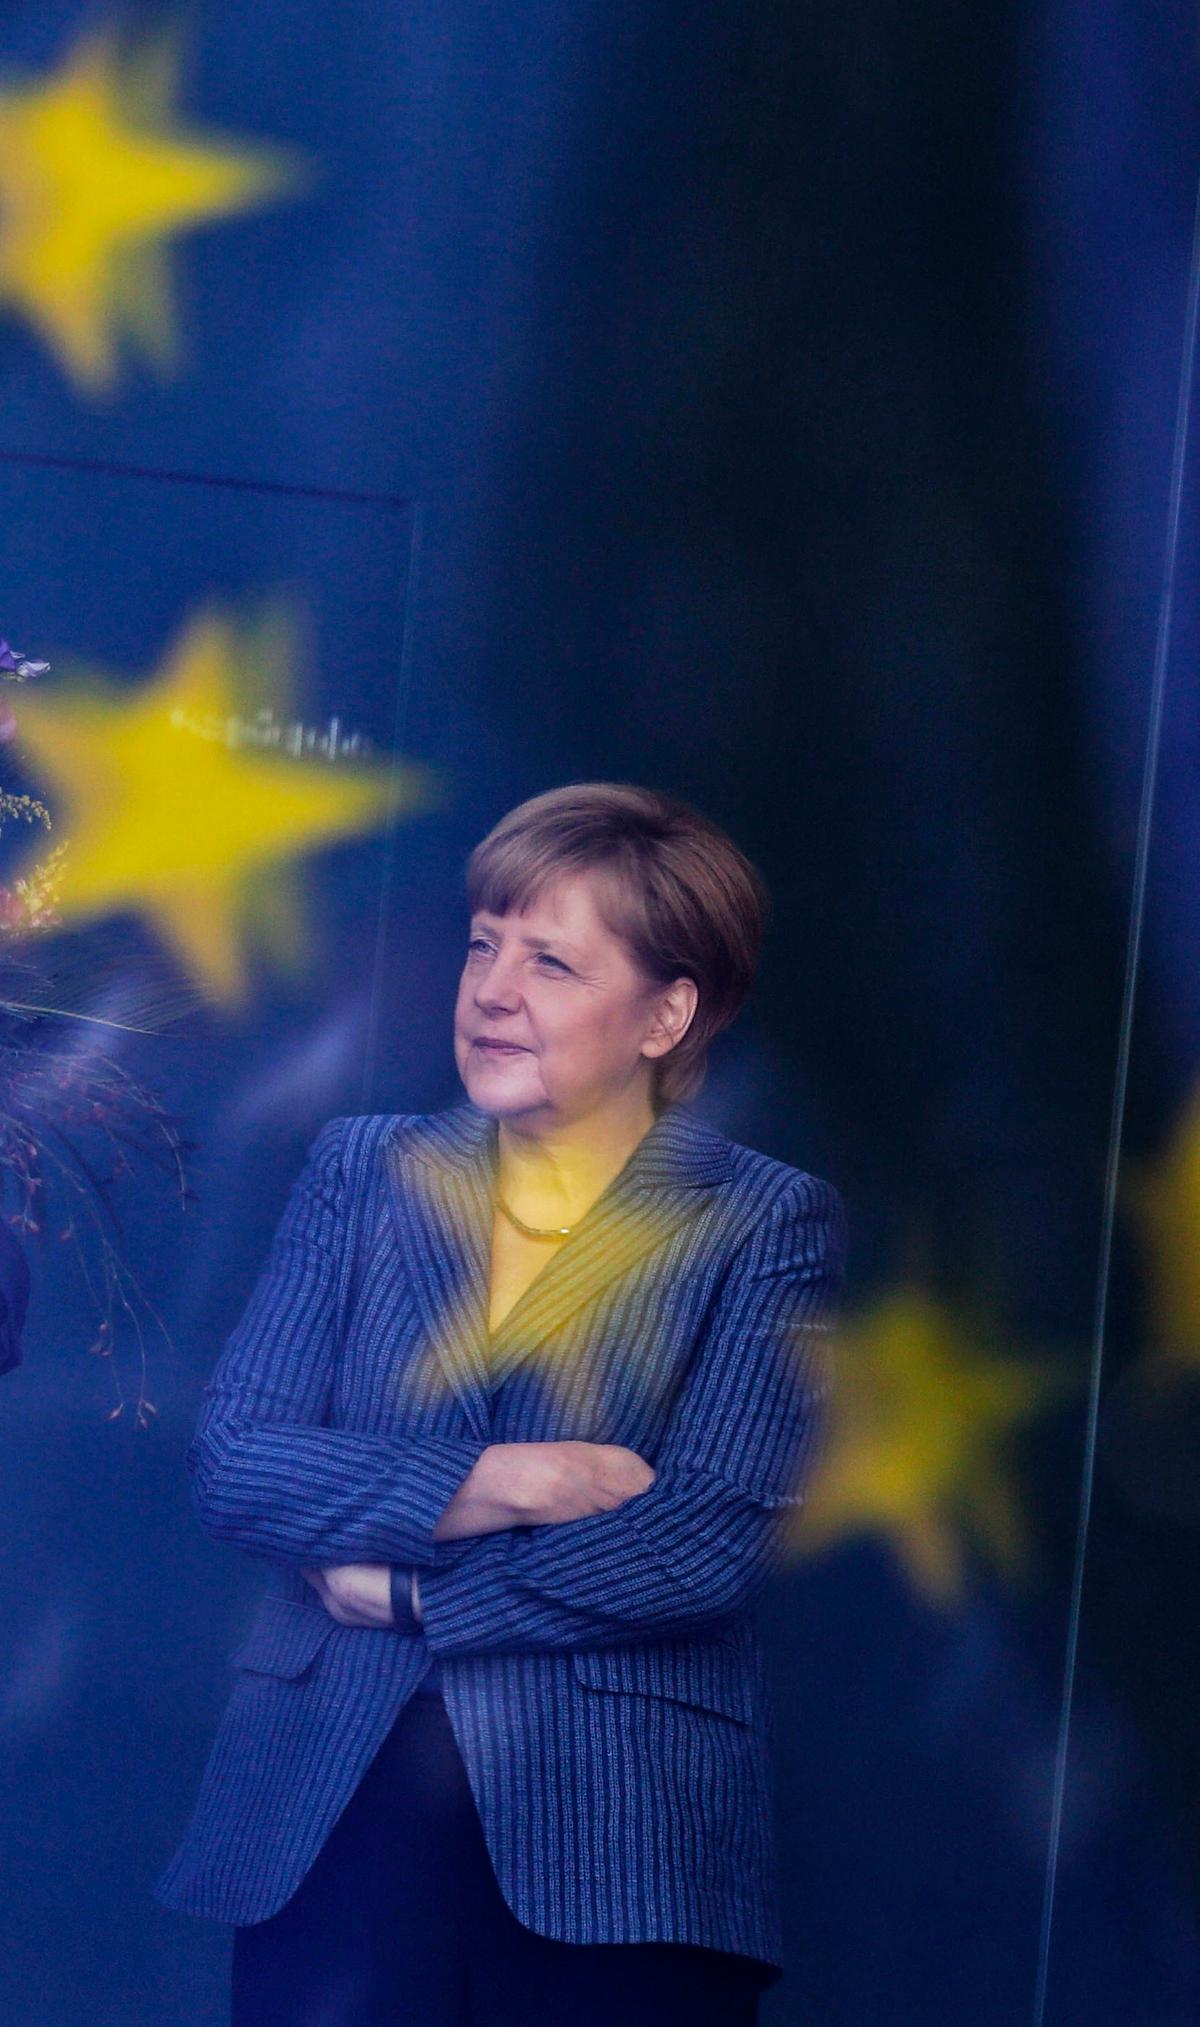 German Chancellor Angela Merkel stands at the chancellery in Berlin on June 2, 2014. (AP Photo/Markus Schreiber)